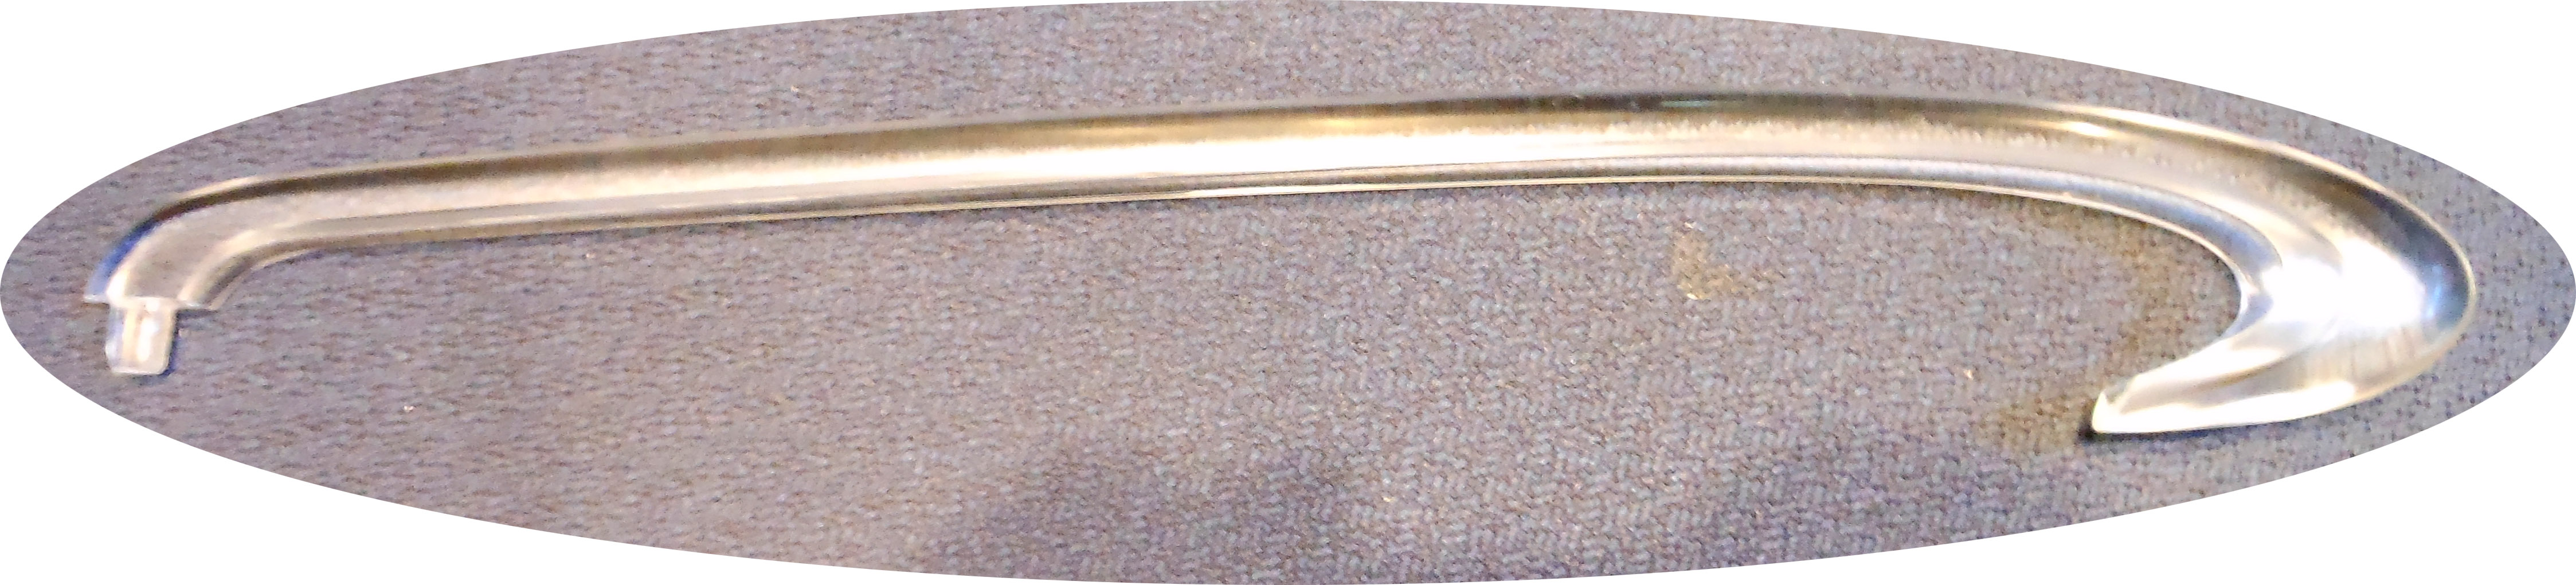 1946 1947 Commodore Hood Ornament blade